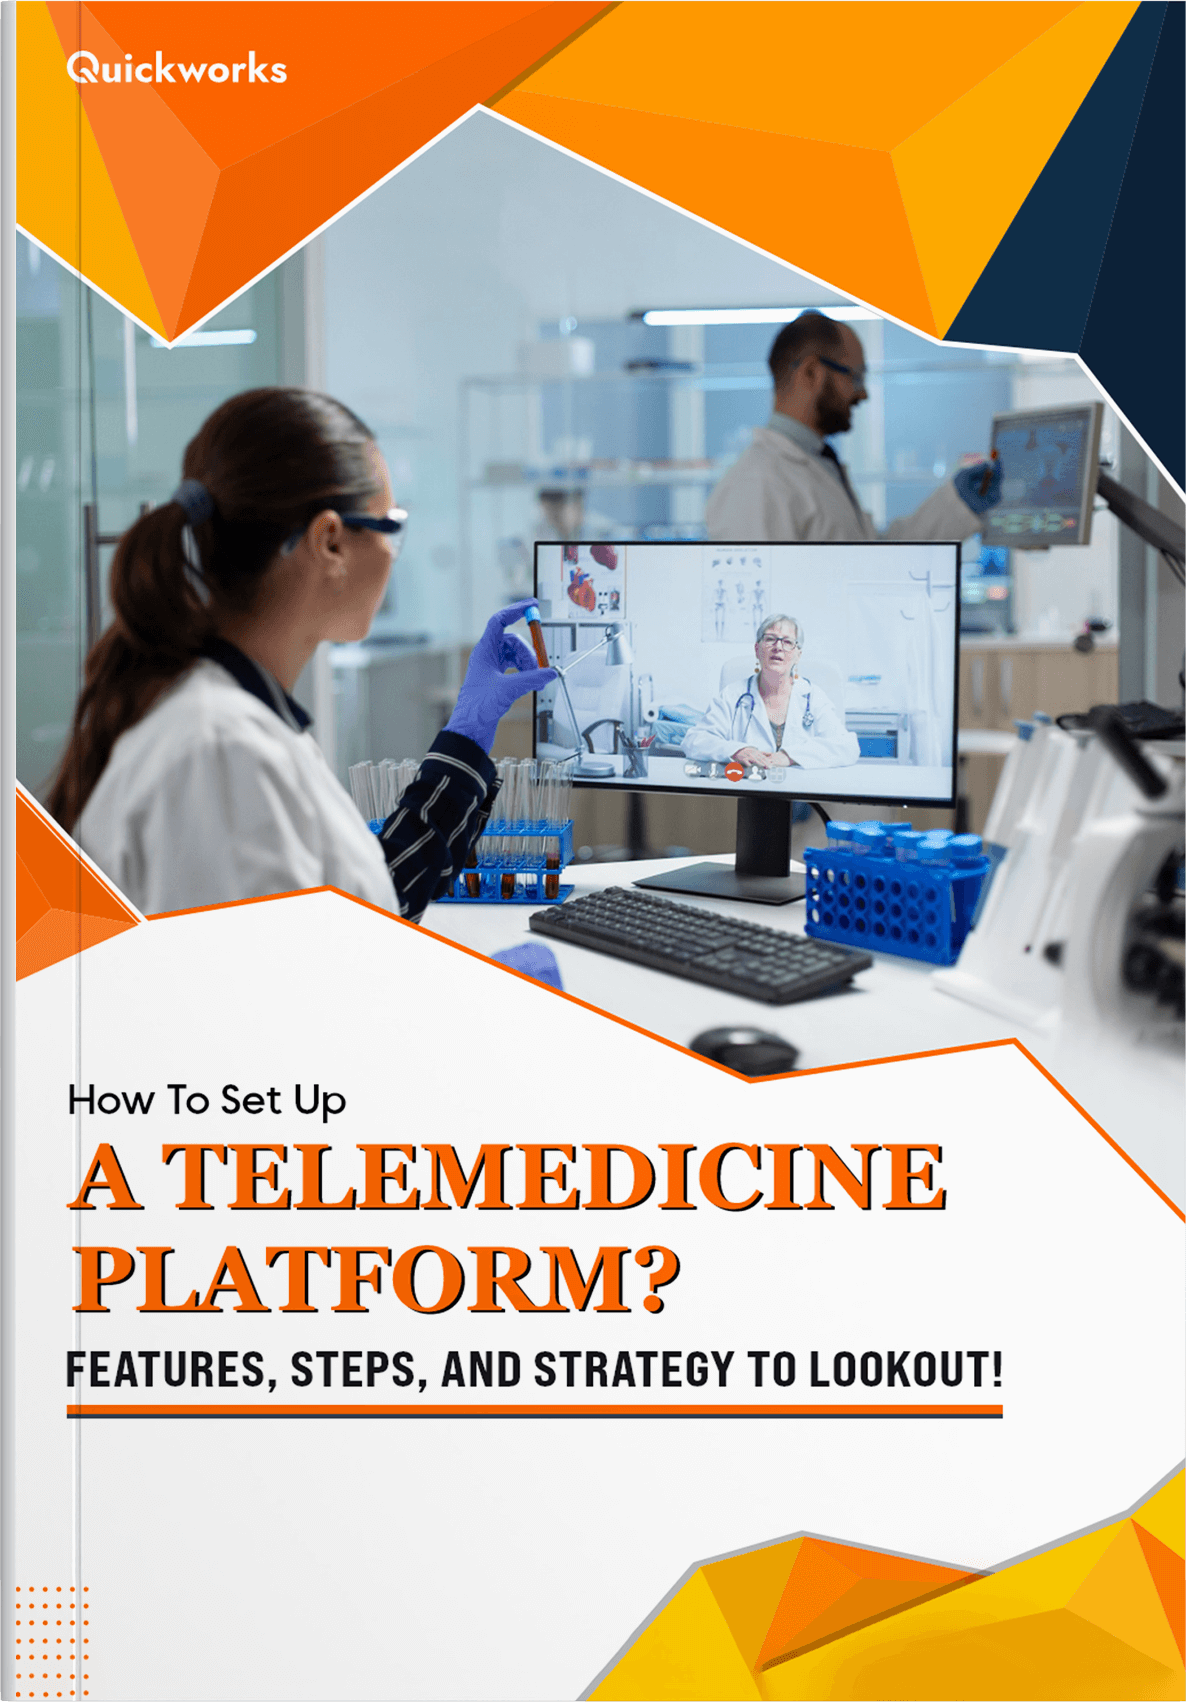 How to Set Up a Telemedicine Platform?